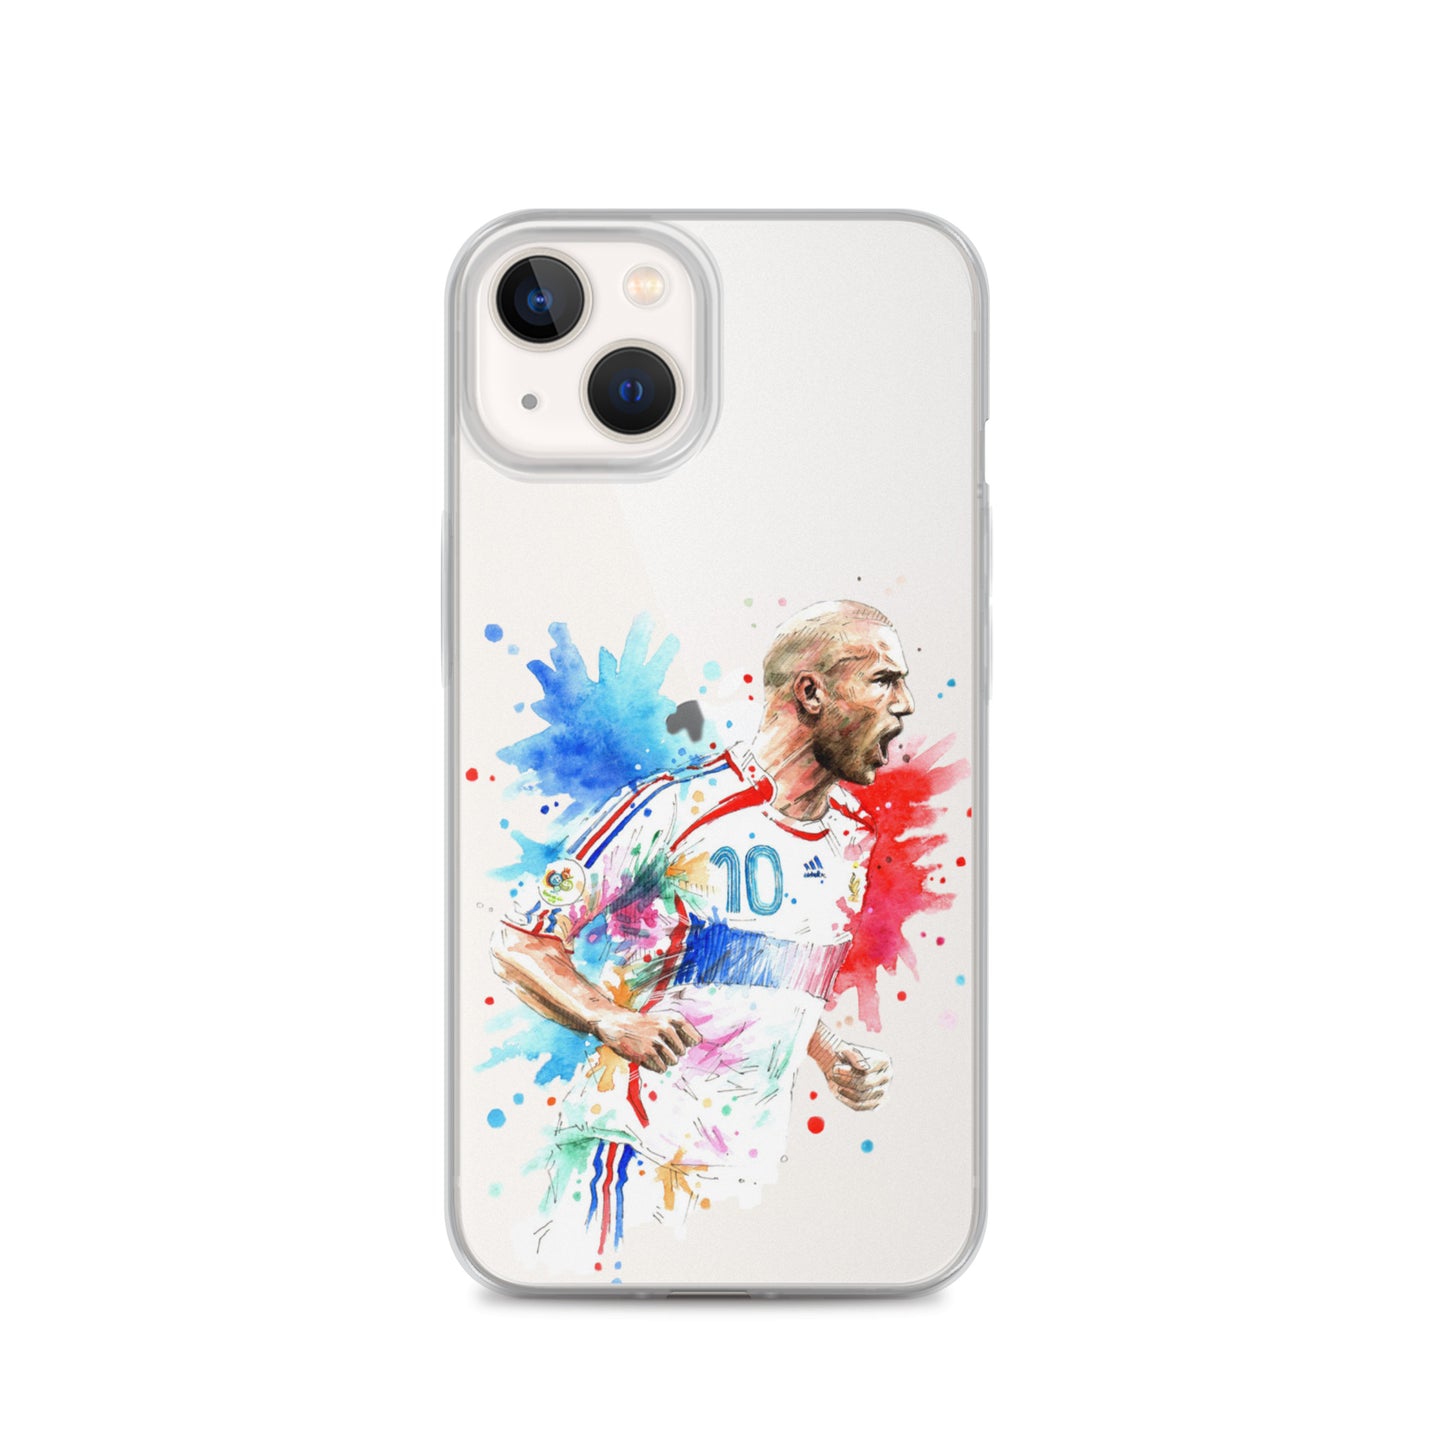 France Zinadine Zidane "Zizou" Vintage Clear Case for iPhone® - The 90+ Minute